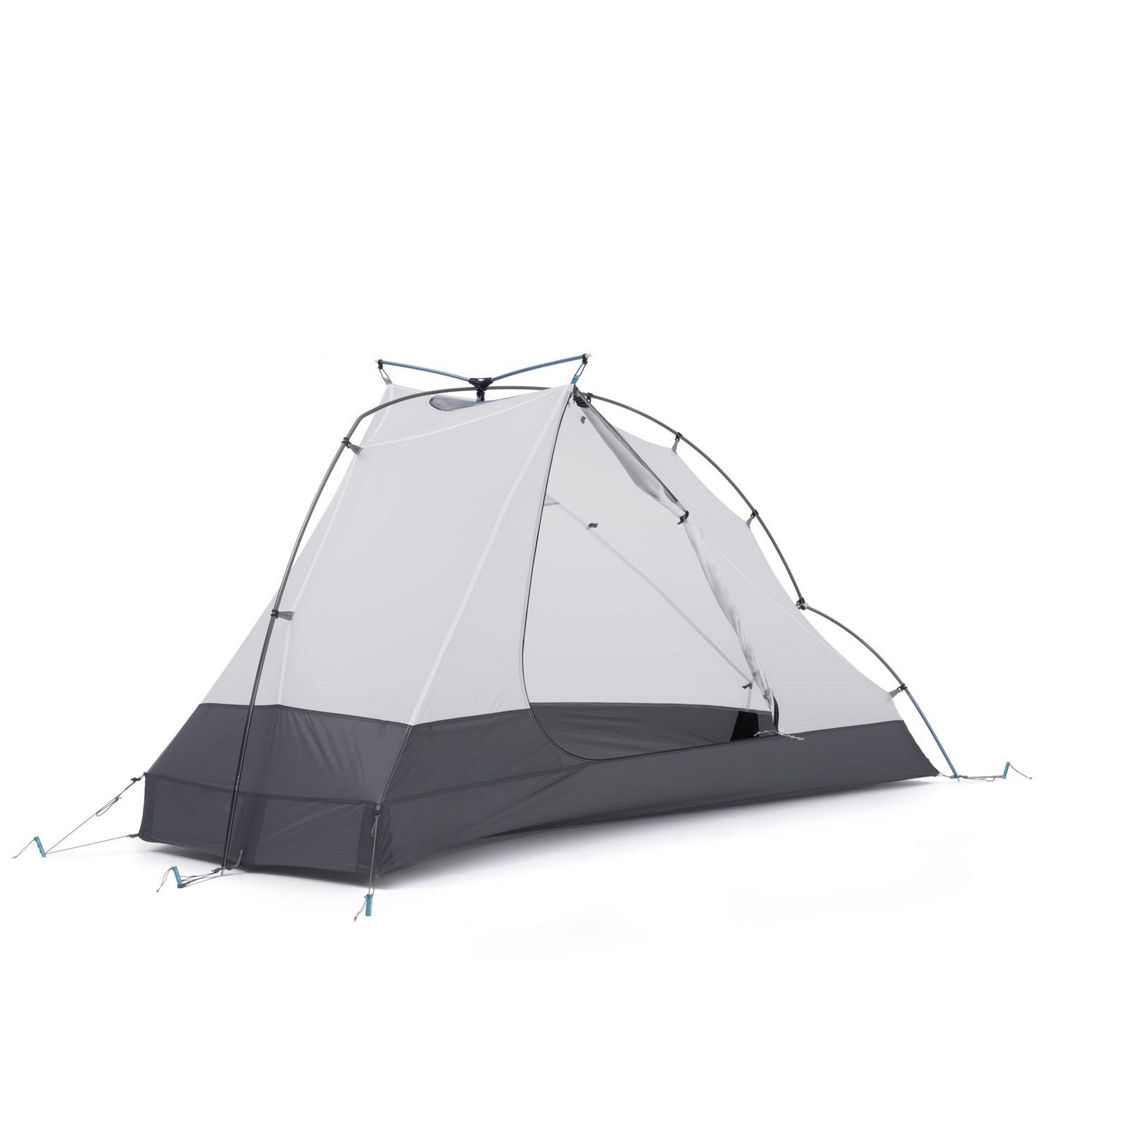 Alto TR1 Plus Tent 1 Person Shale Grey - Image 2 of 2